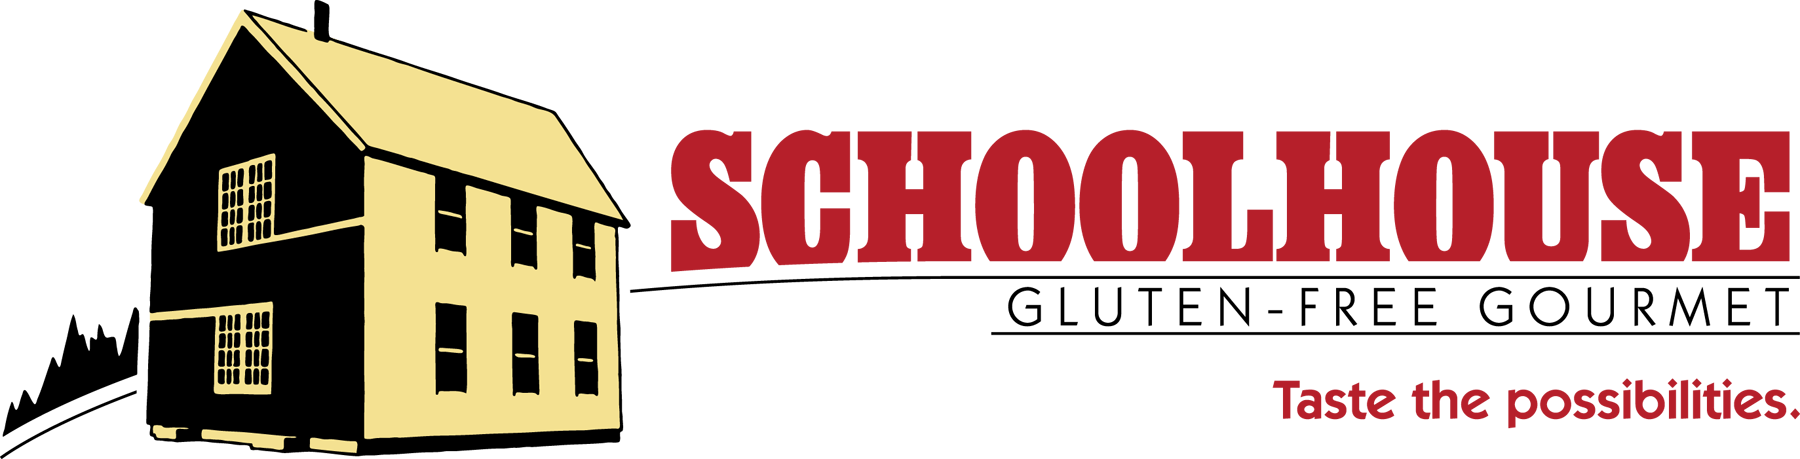 Schoolhouse Logo Tagline Rgb - Schoolhouse Bakery (1800x459)